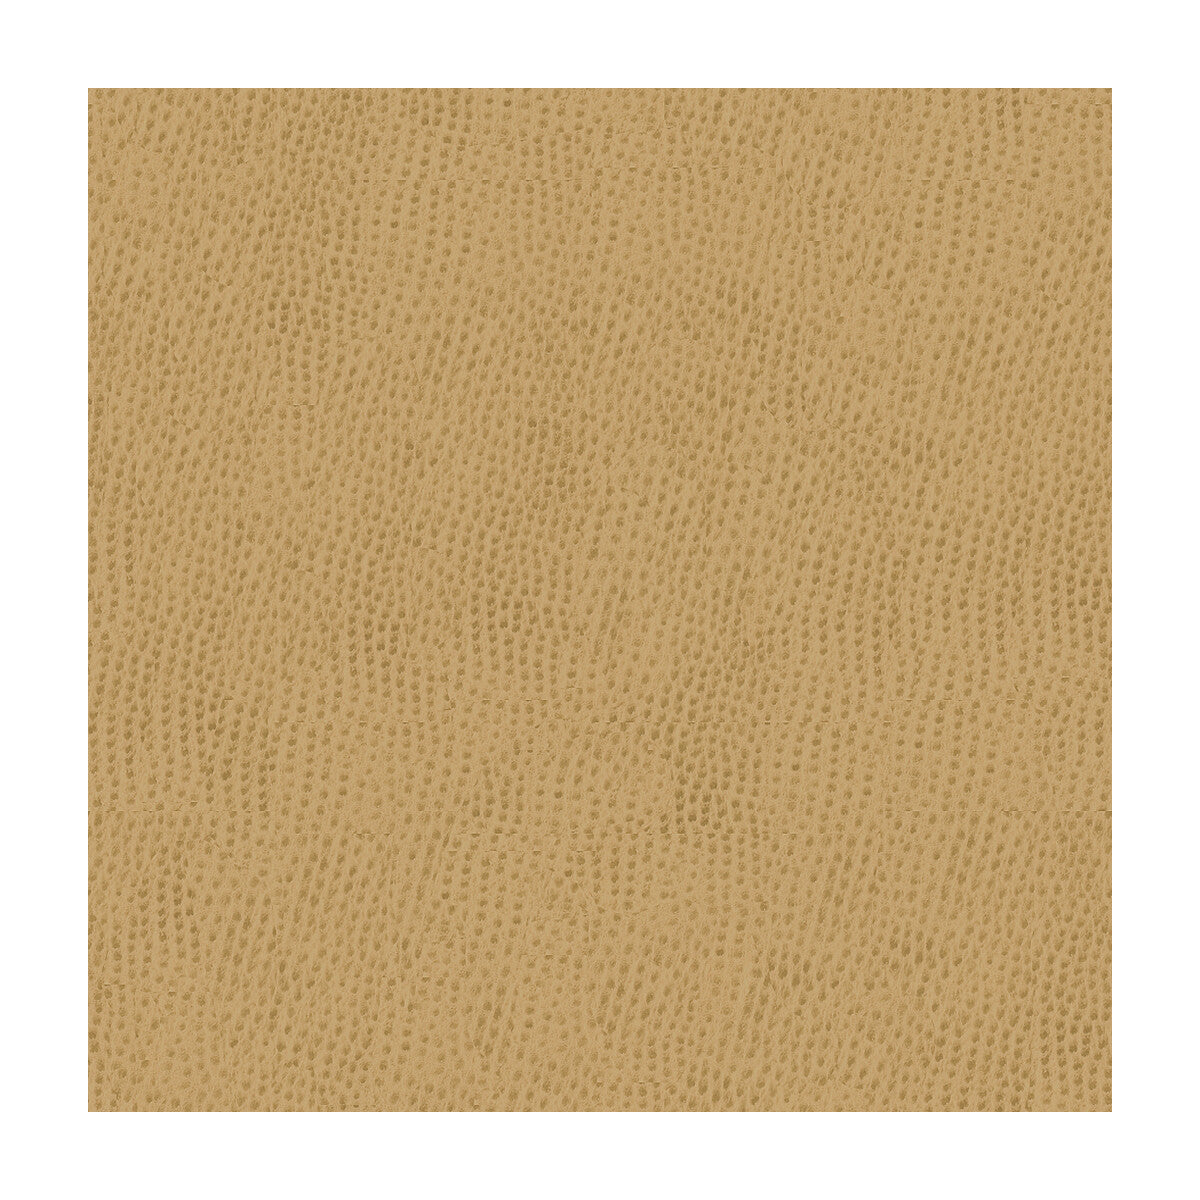 Kravet Contract fabric in belus-1616 color - pattern BELUS.1616.0 - by Kravet Contract